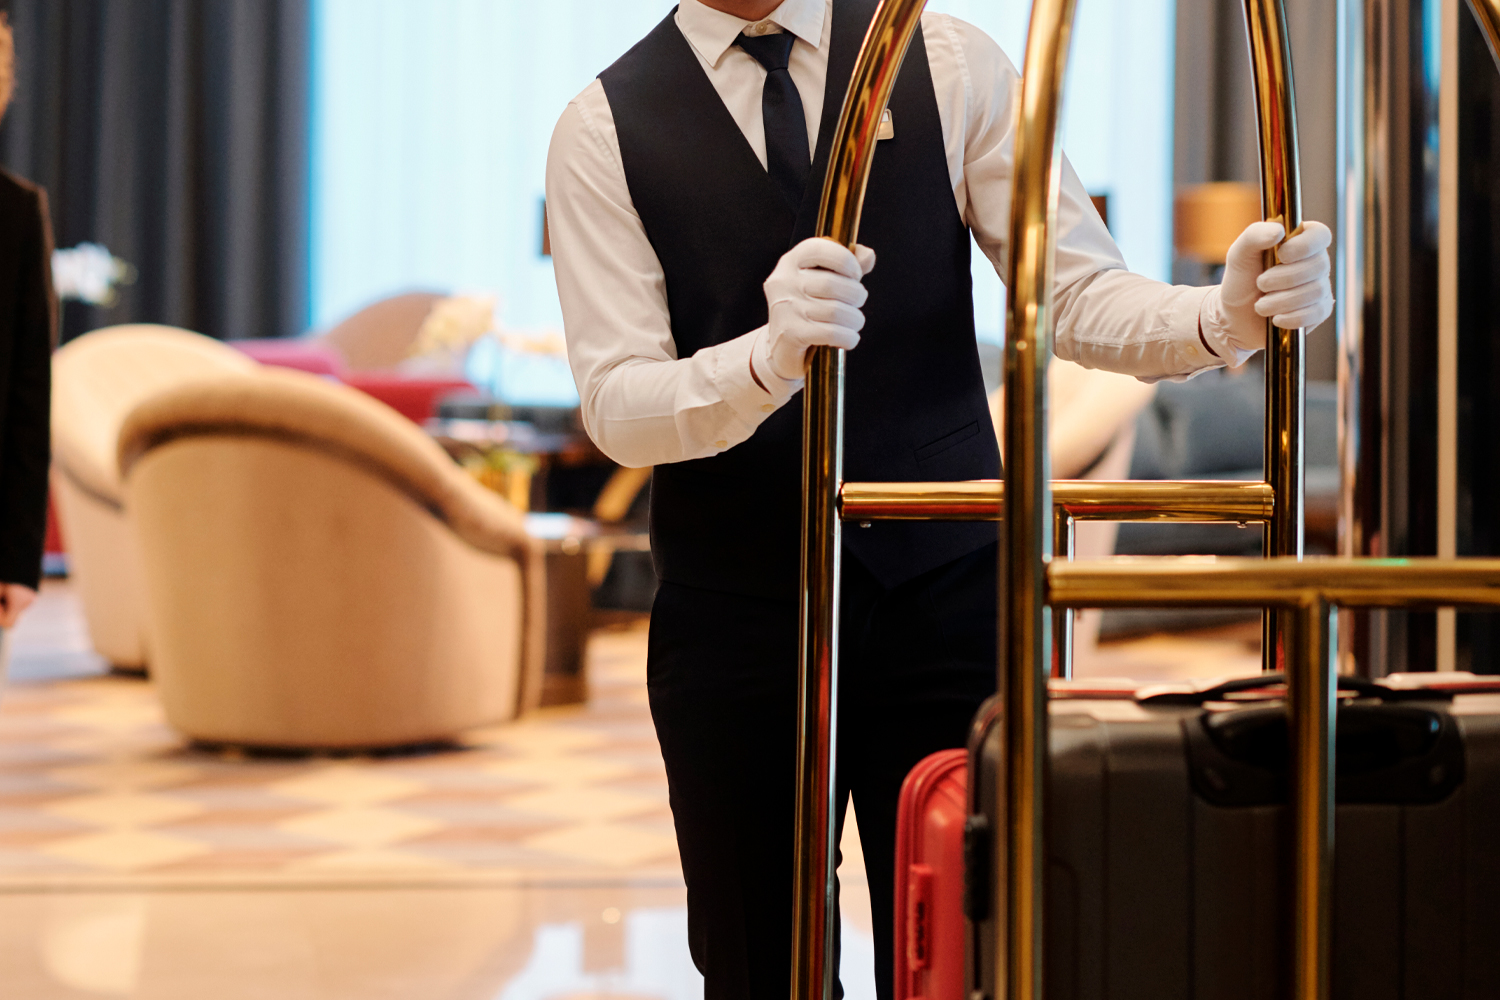 Hotel Housekeeping Equipment / Hotel Room Service Carts / Hotel Luggage Handling